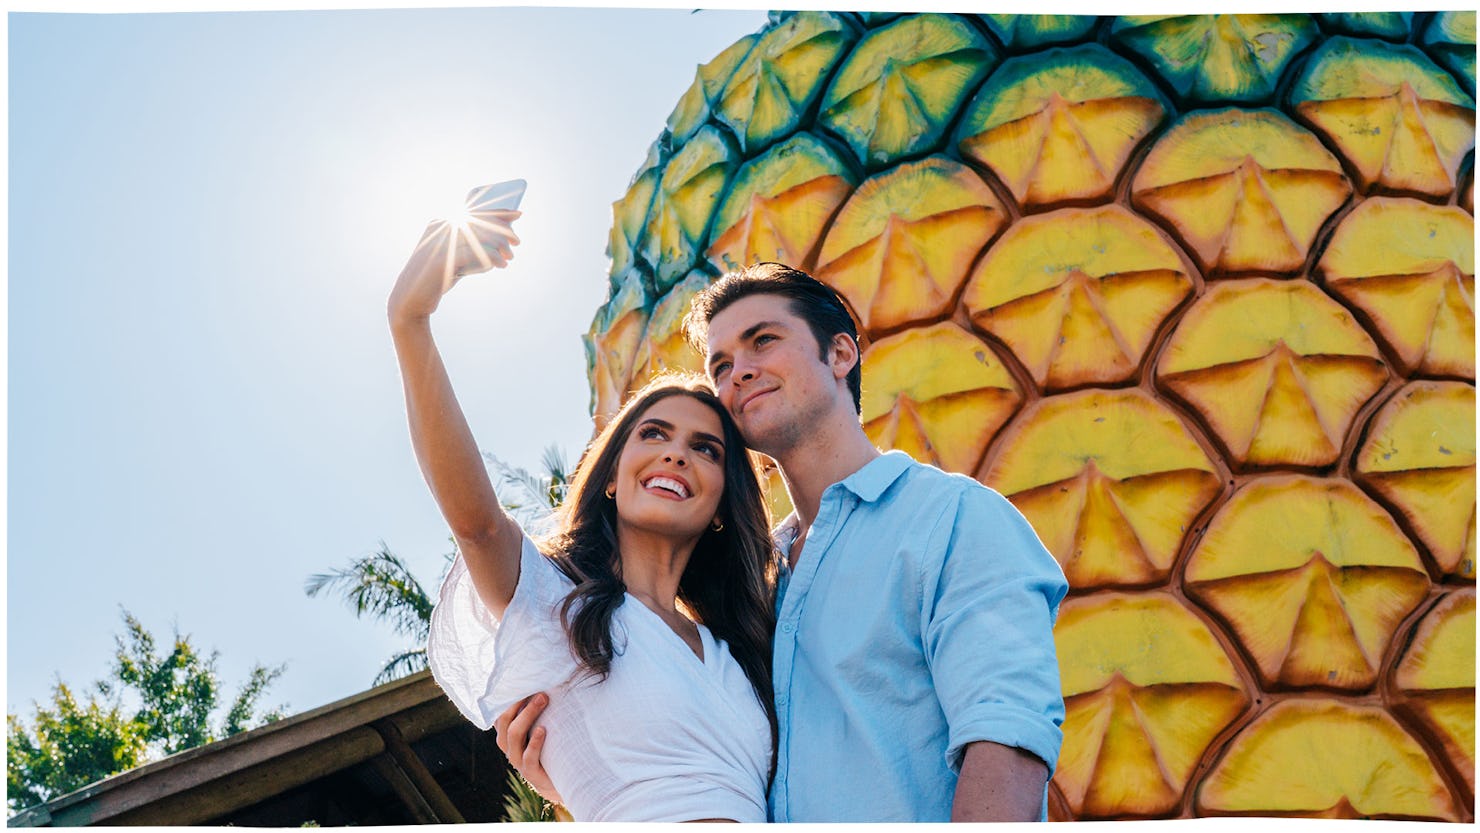 Selfie at The Big Pineapple 